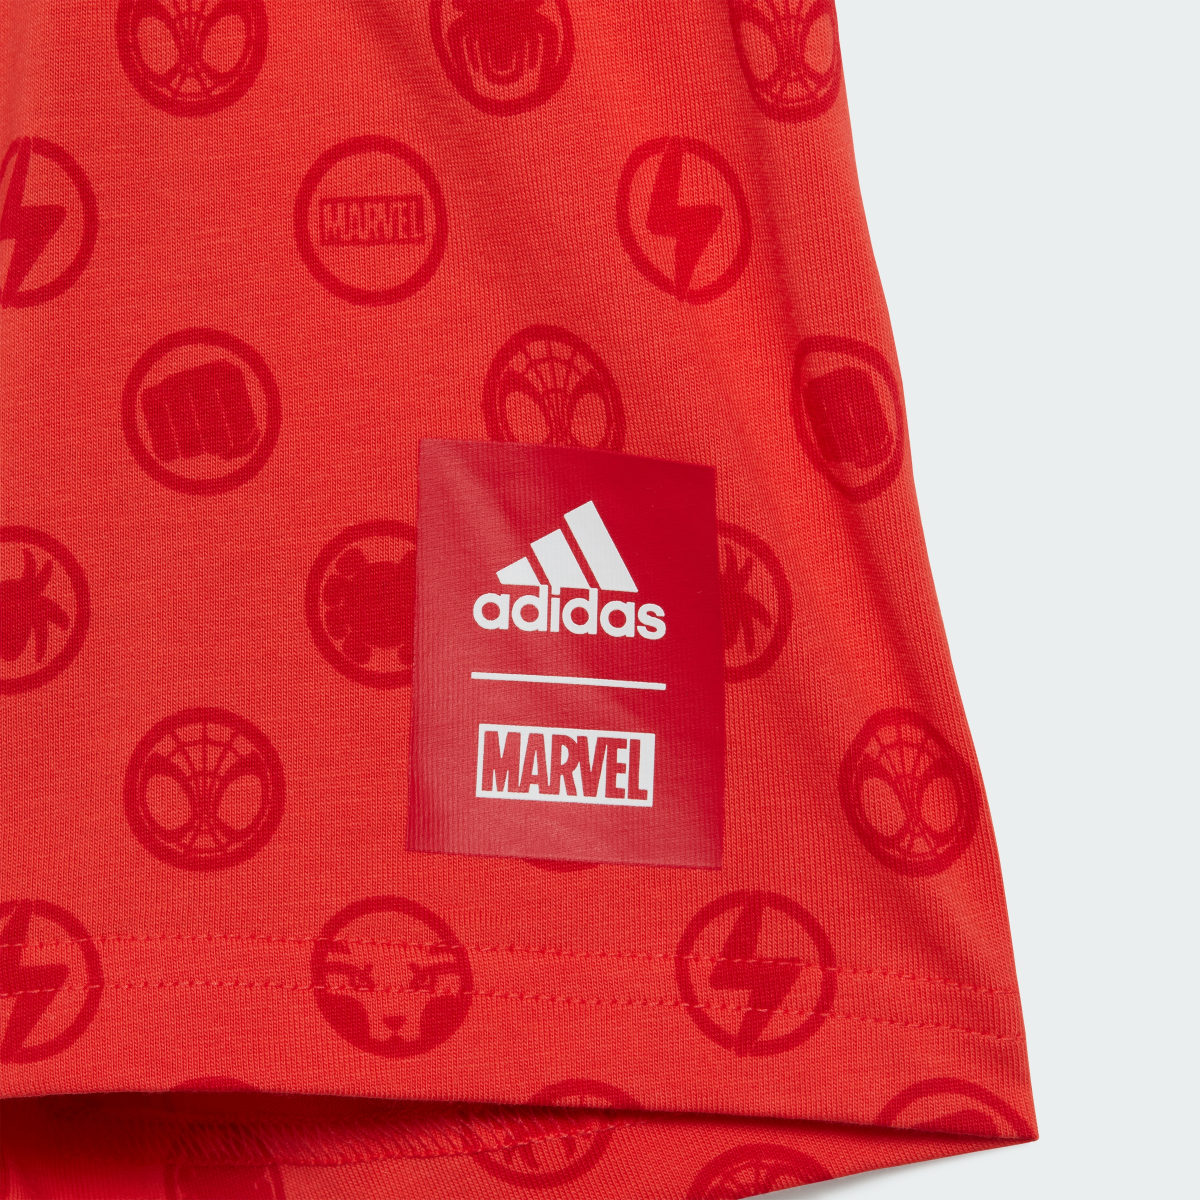 Adidas x Marvel Spider-Man Tee and Shorts Set. 9